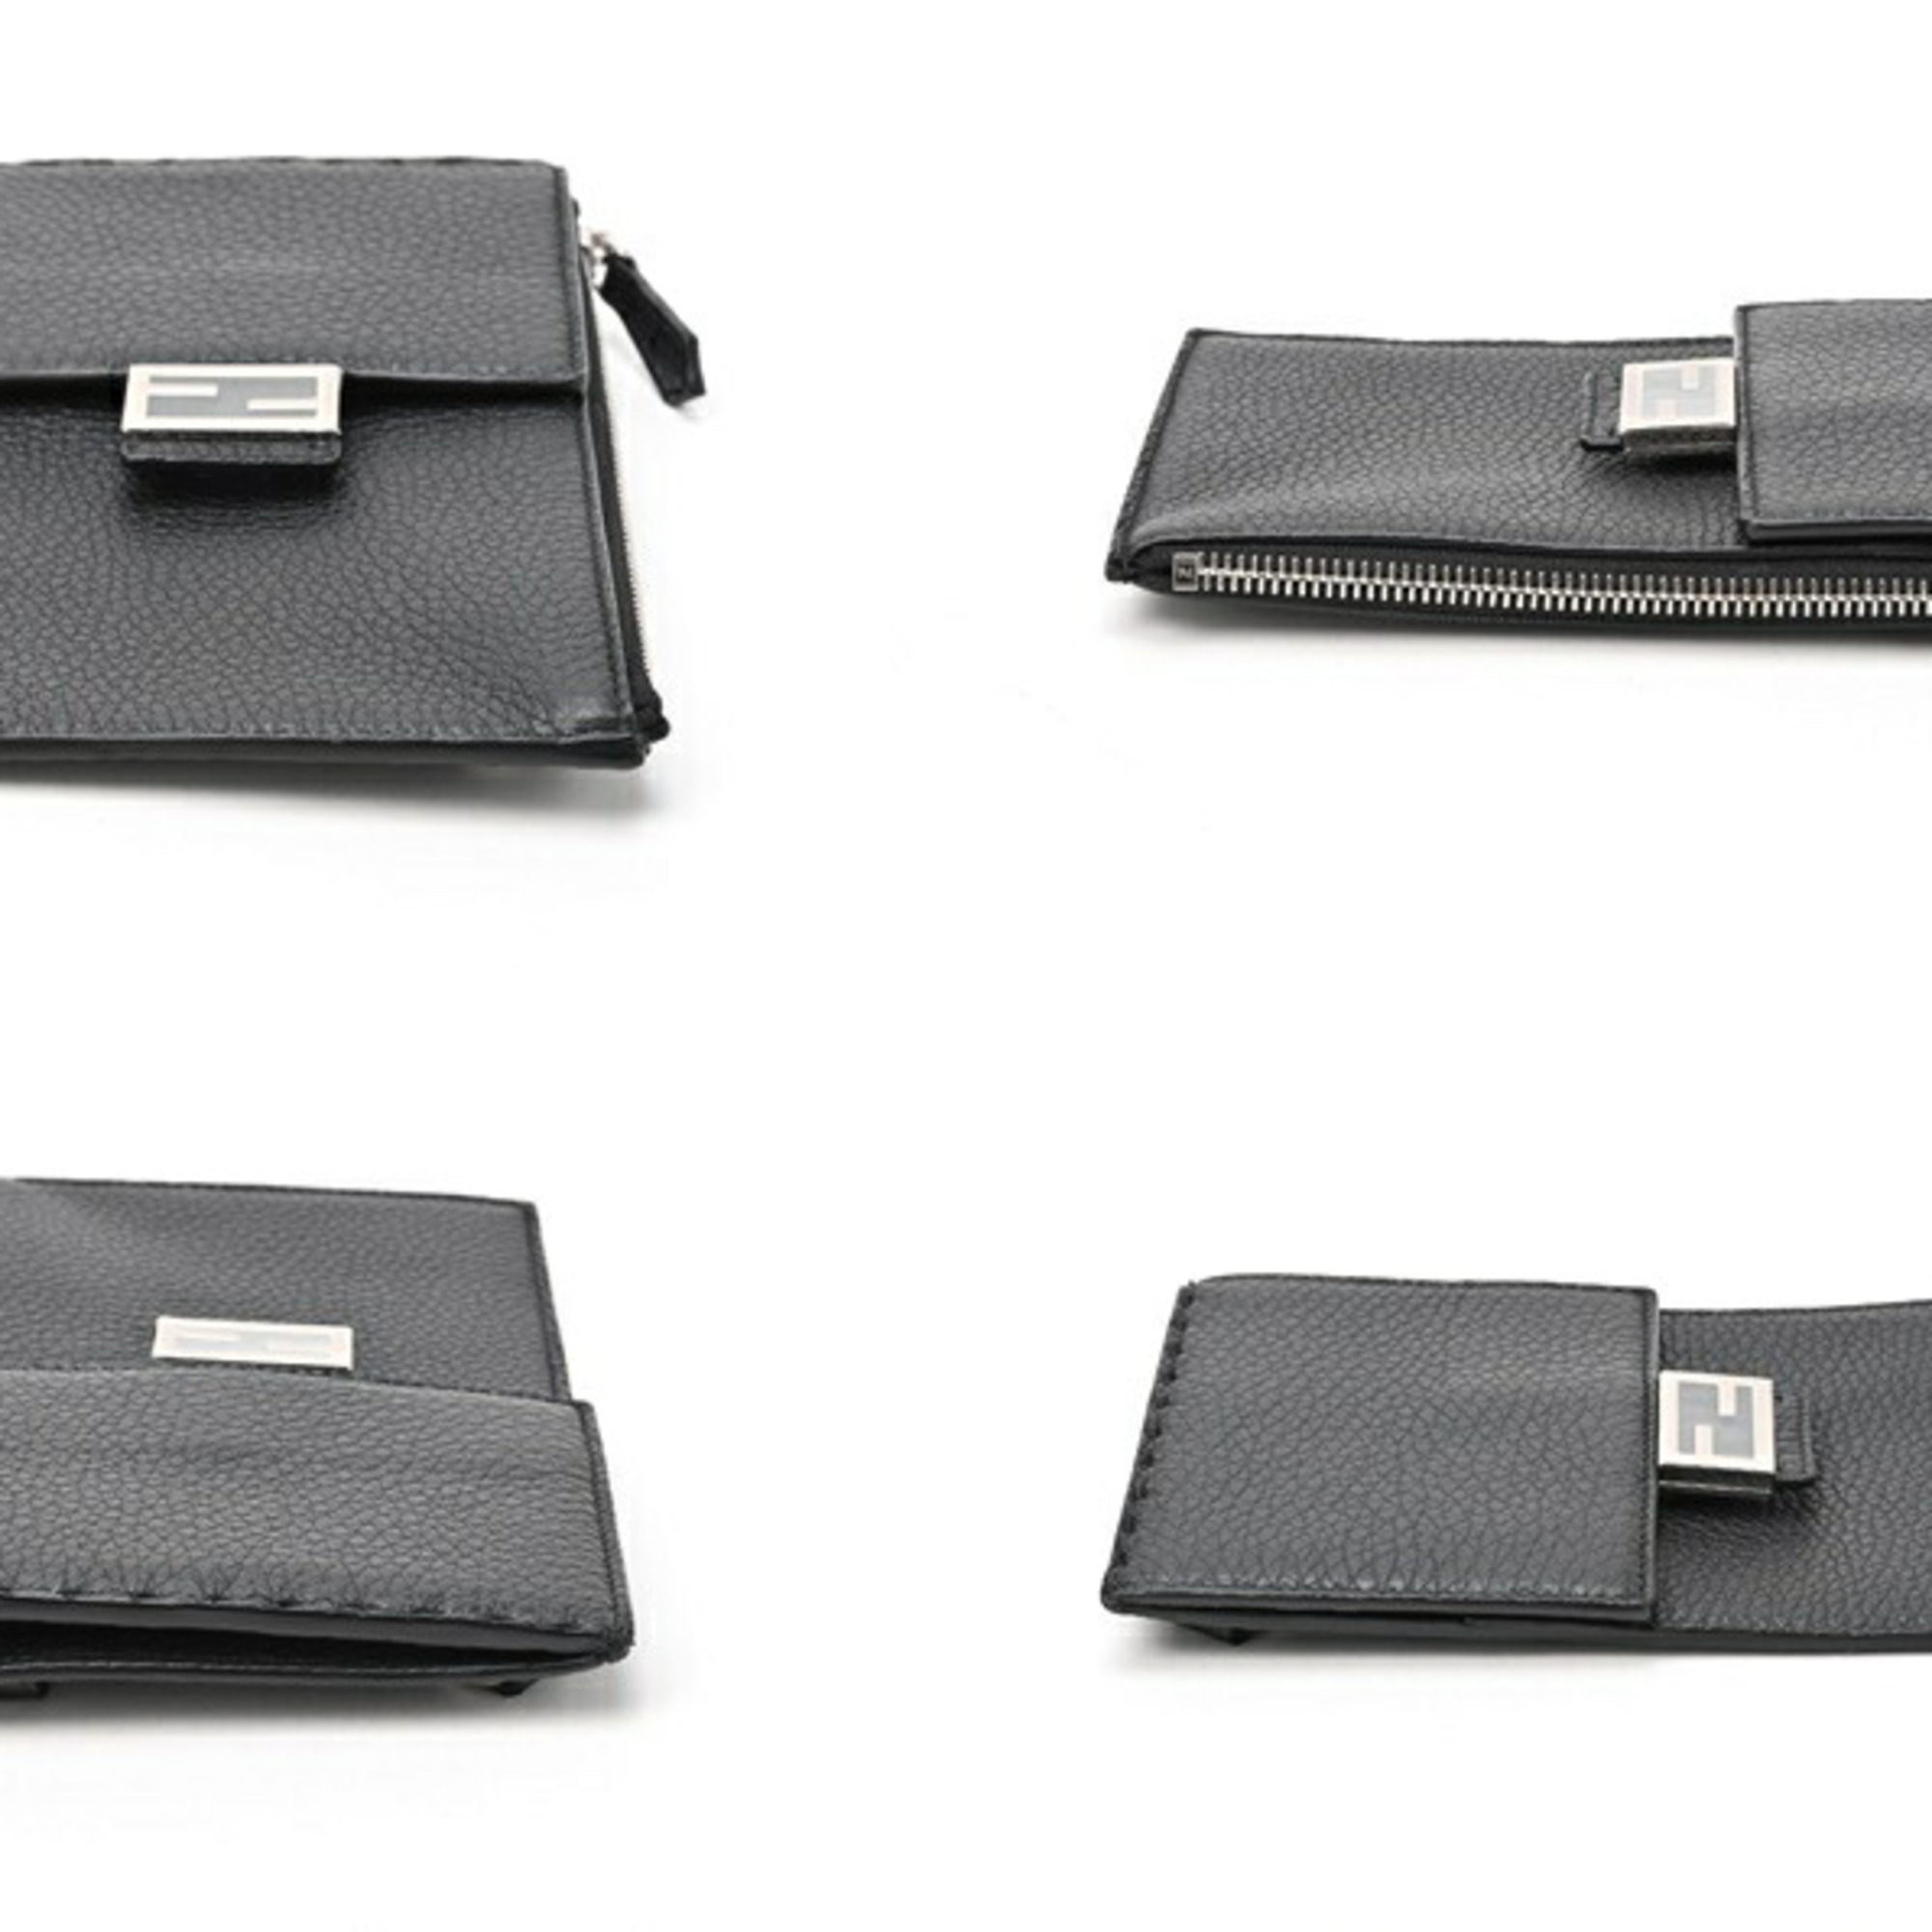 FENDI Phone Holder Smartphone Pouch Shoulder Bag 7AS034 Selleria Leather Black S-155407